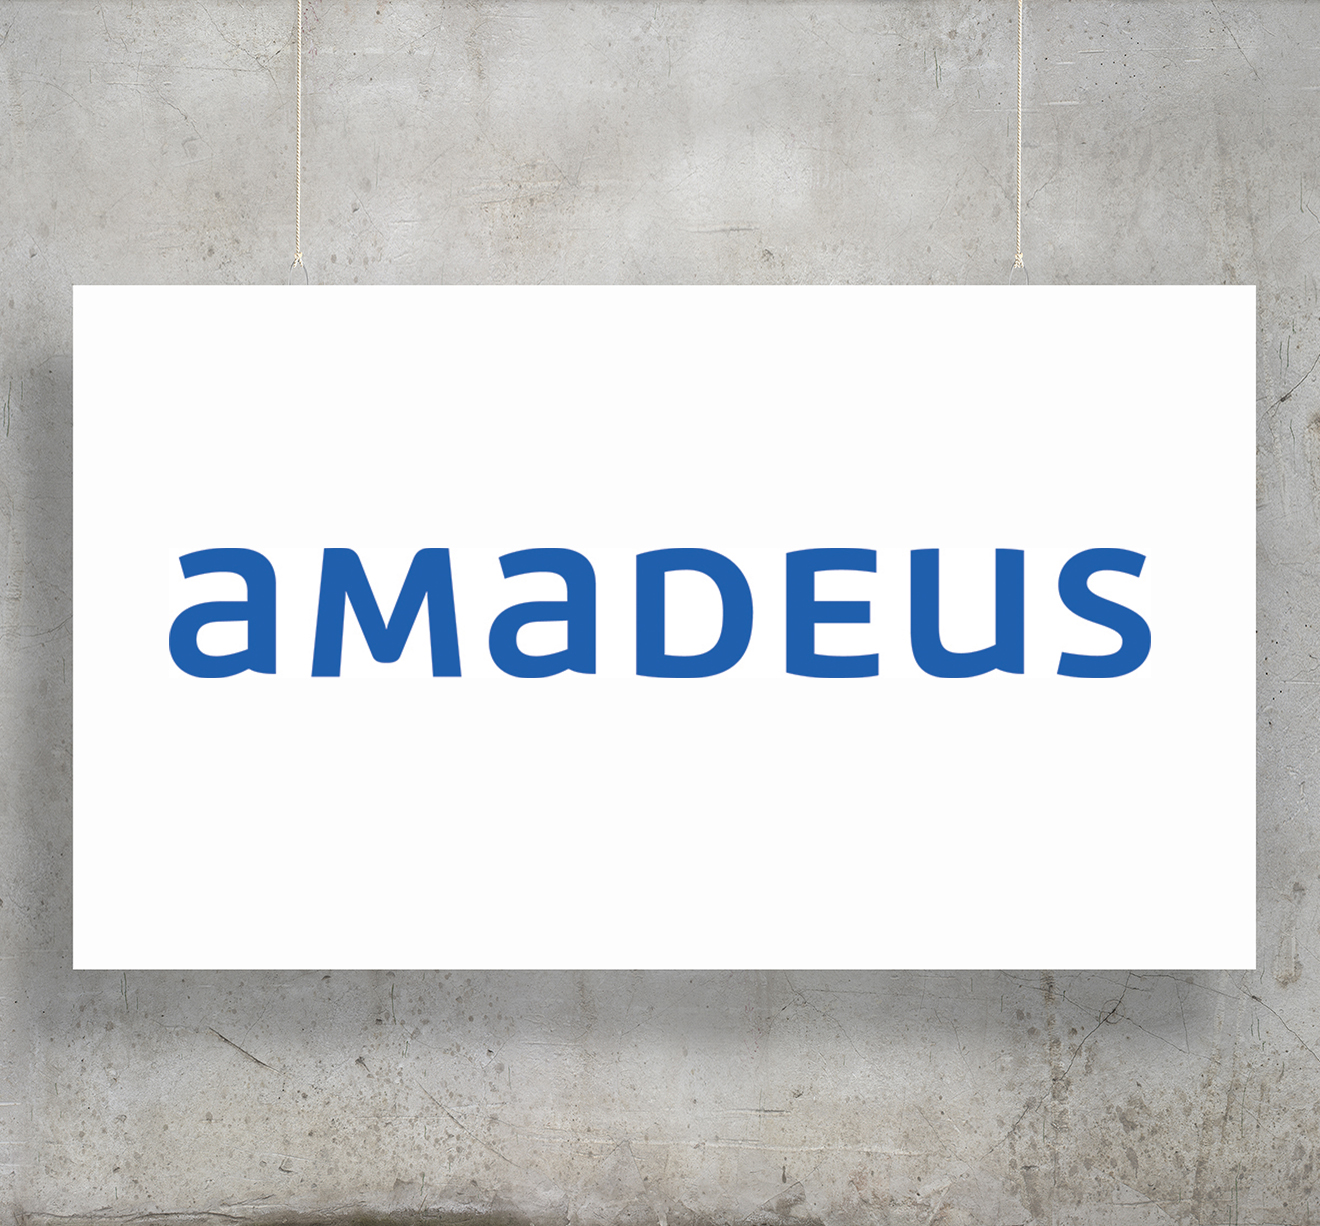 Amadeus Company Profile